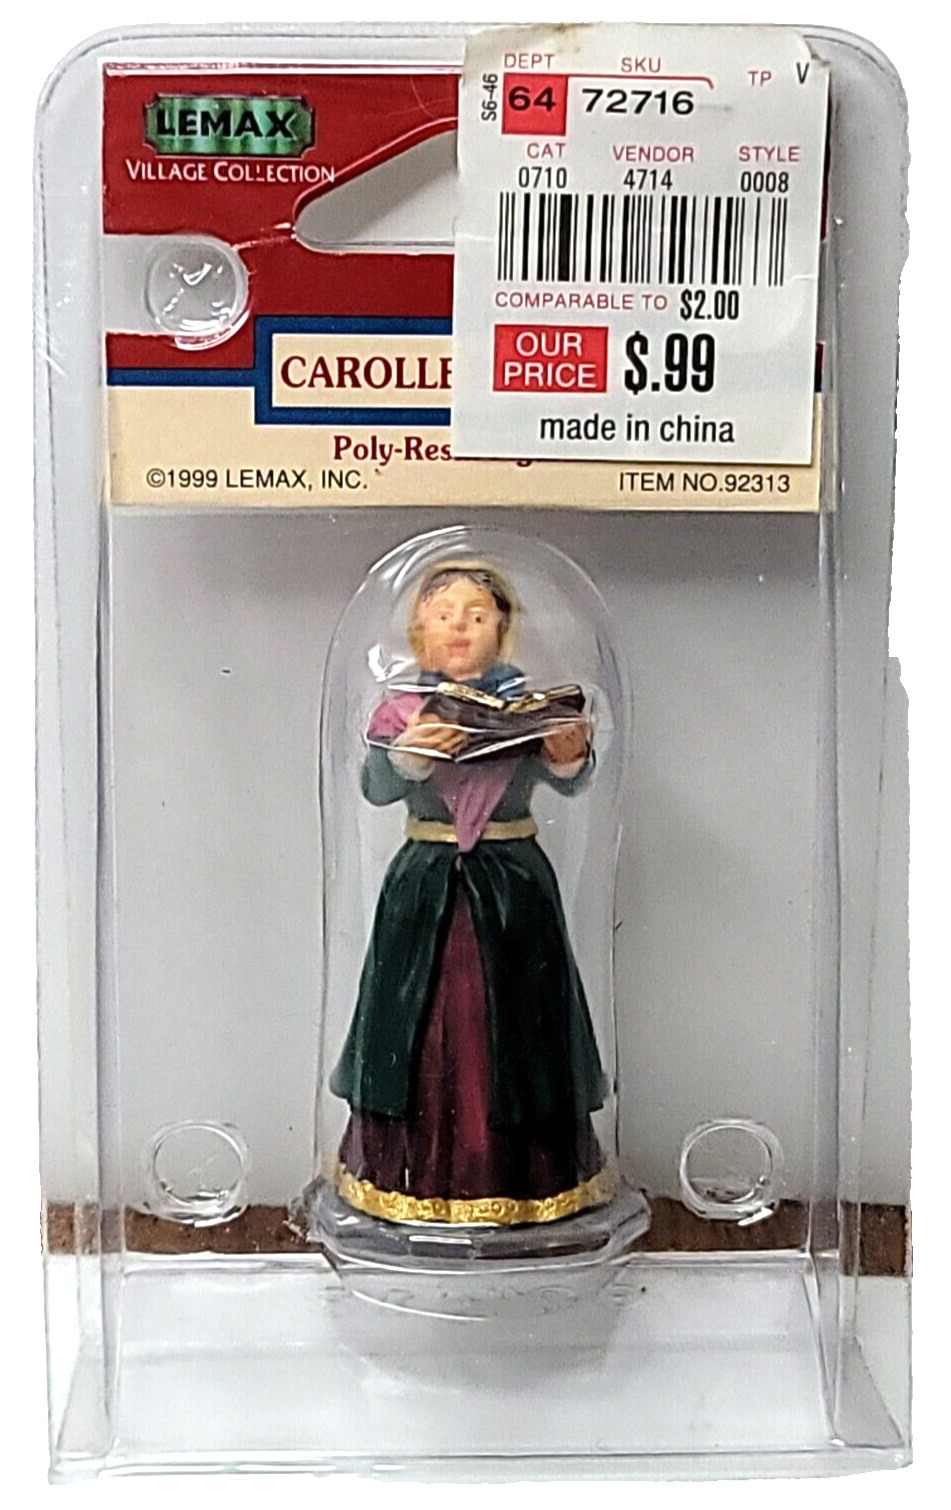 VTG Lemax 1999 Caroller Woman Christmas Village Polyresin Figurine 92313 